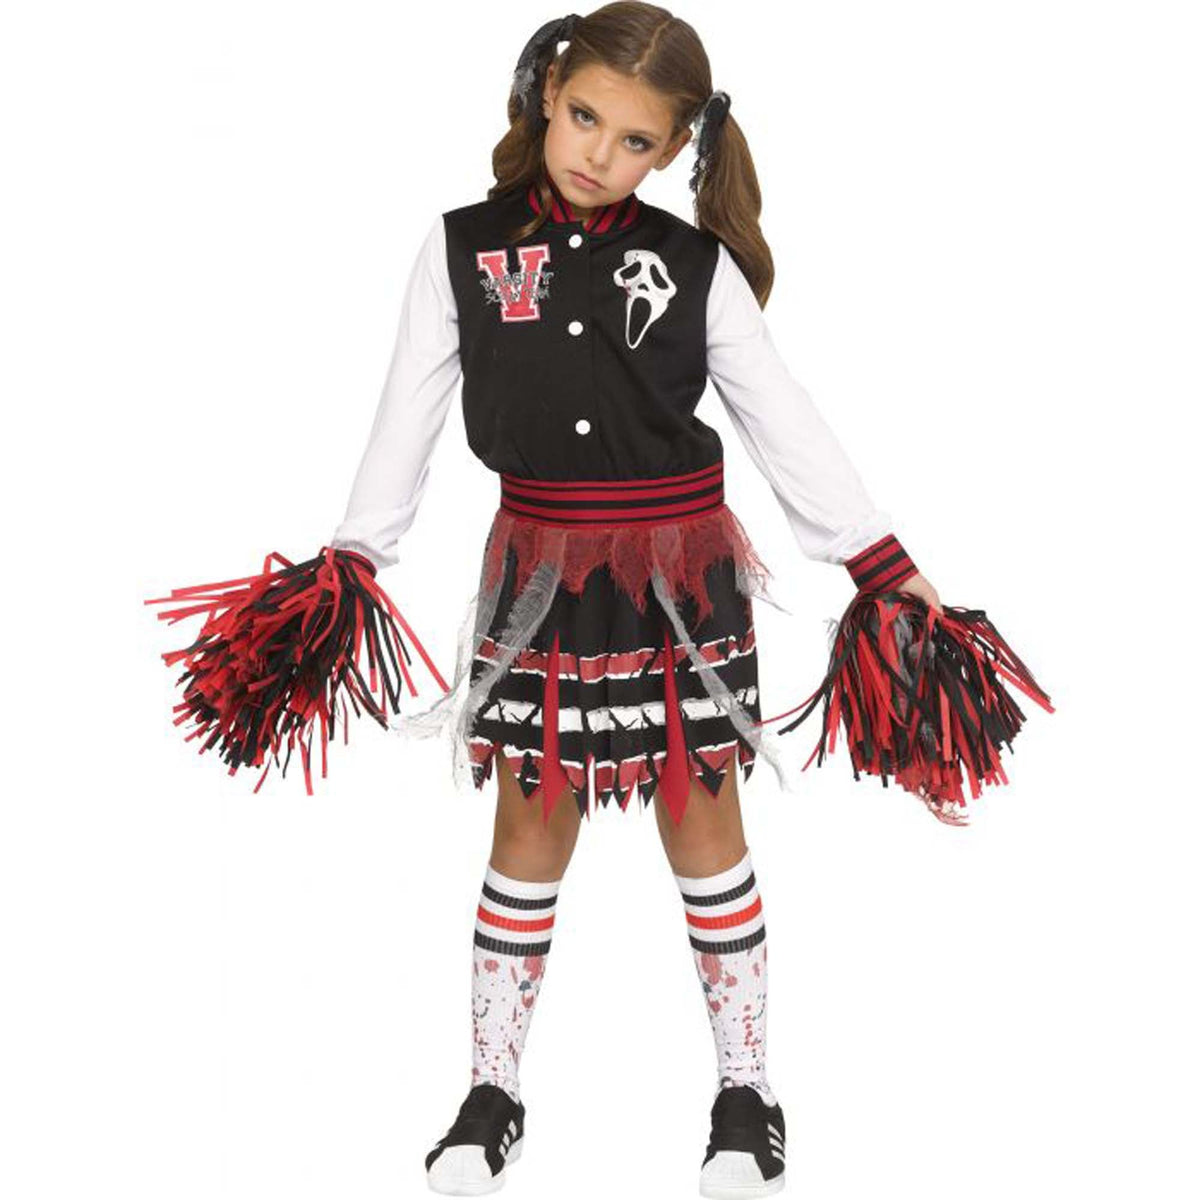 FUN WORLD Costumes Scream for the Team! Cheerleader Costume for Kids